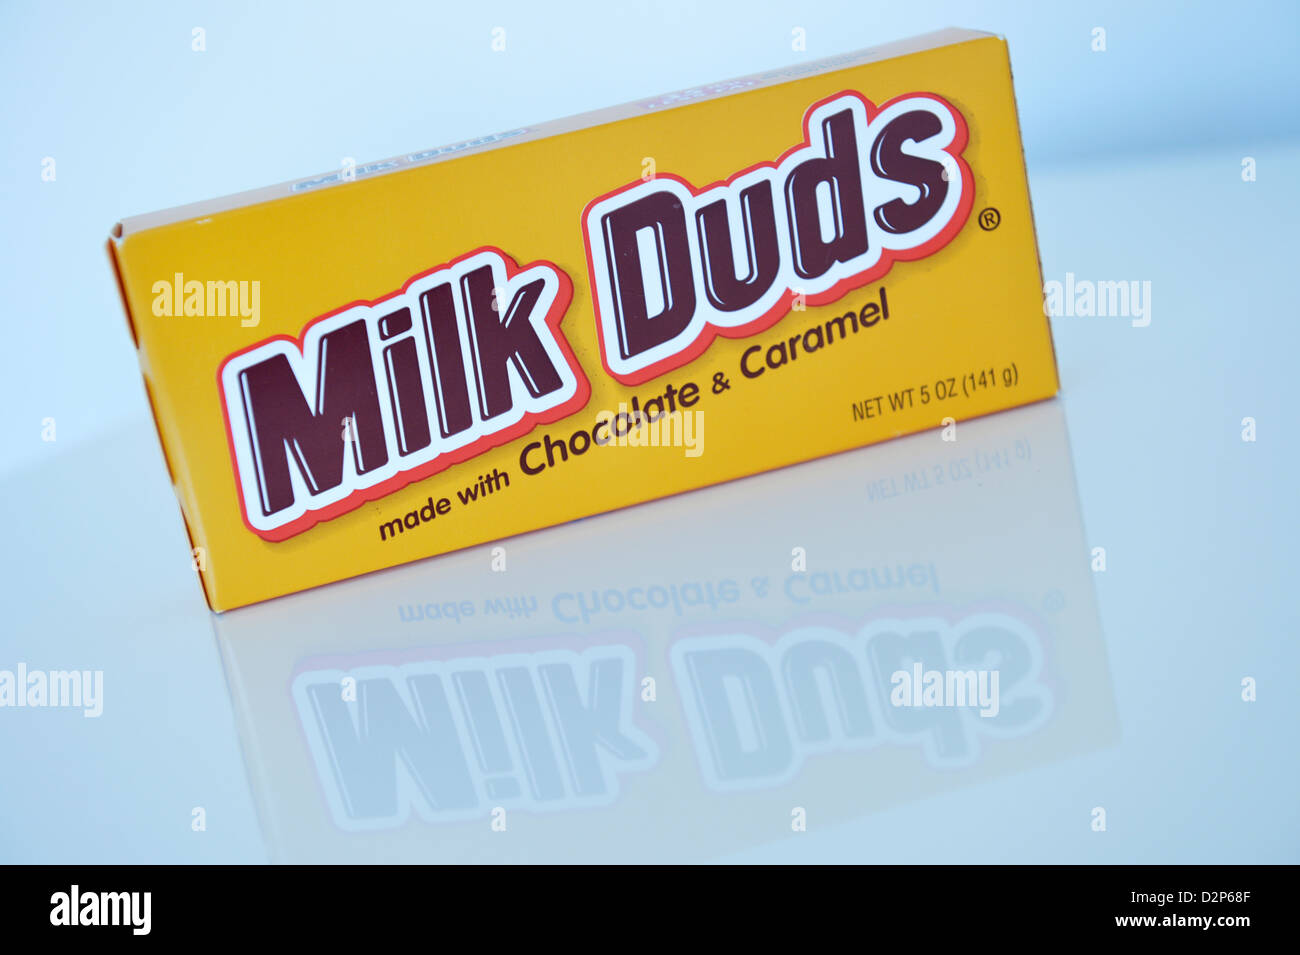 Milk Duds - American caramel chocolate / The Hershey Company Stock Photo